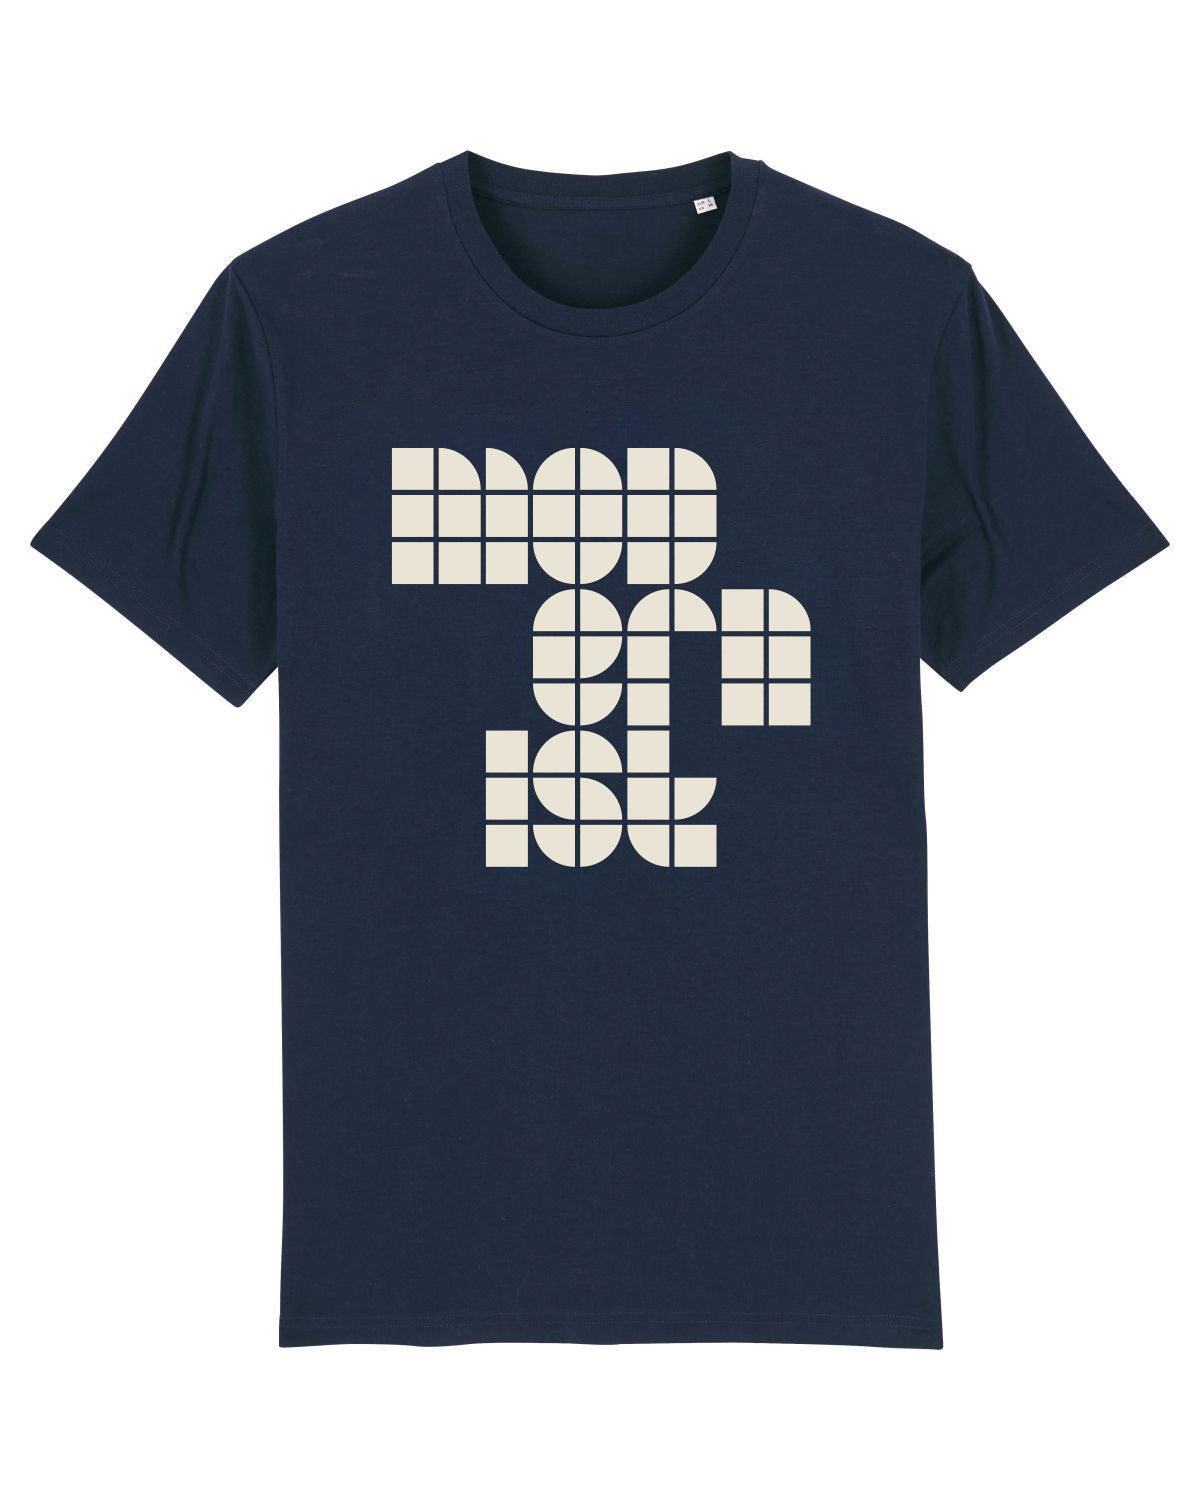 MODERNIST: T-Shirt in Stone Official Merchandise for Detail magazine 